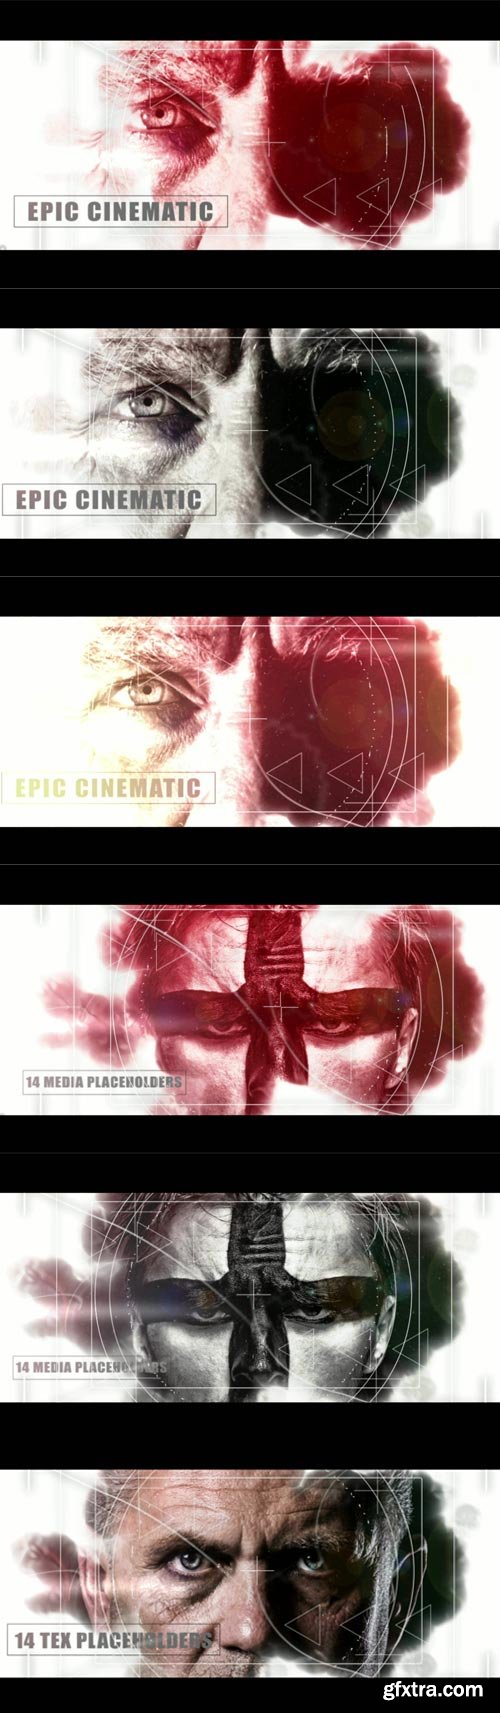 MotionElements - Epic Inspiring Cinematic Slideshow - 10487494